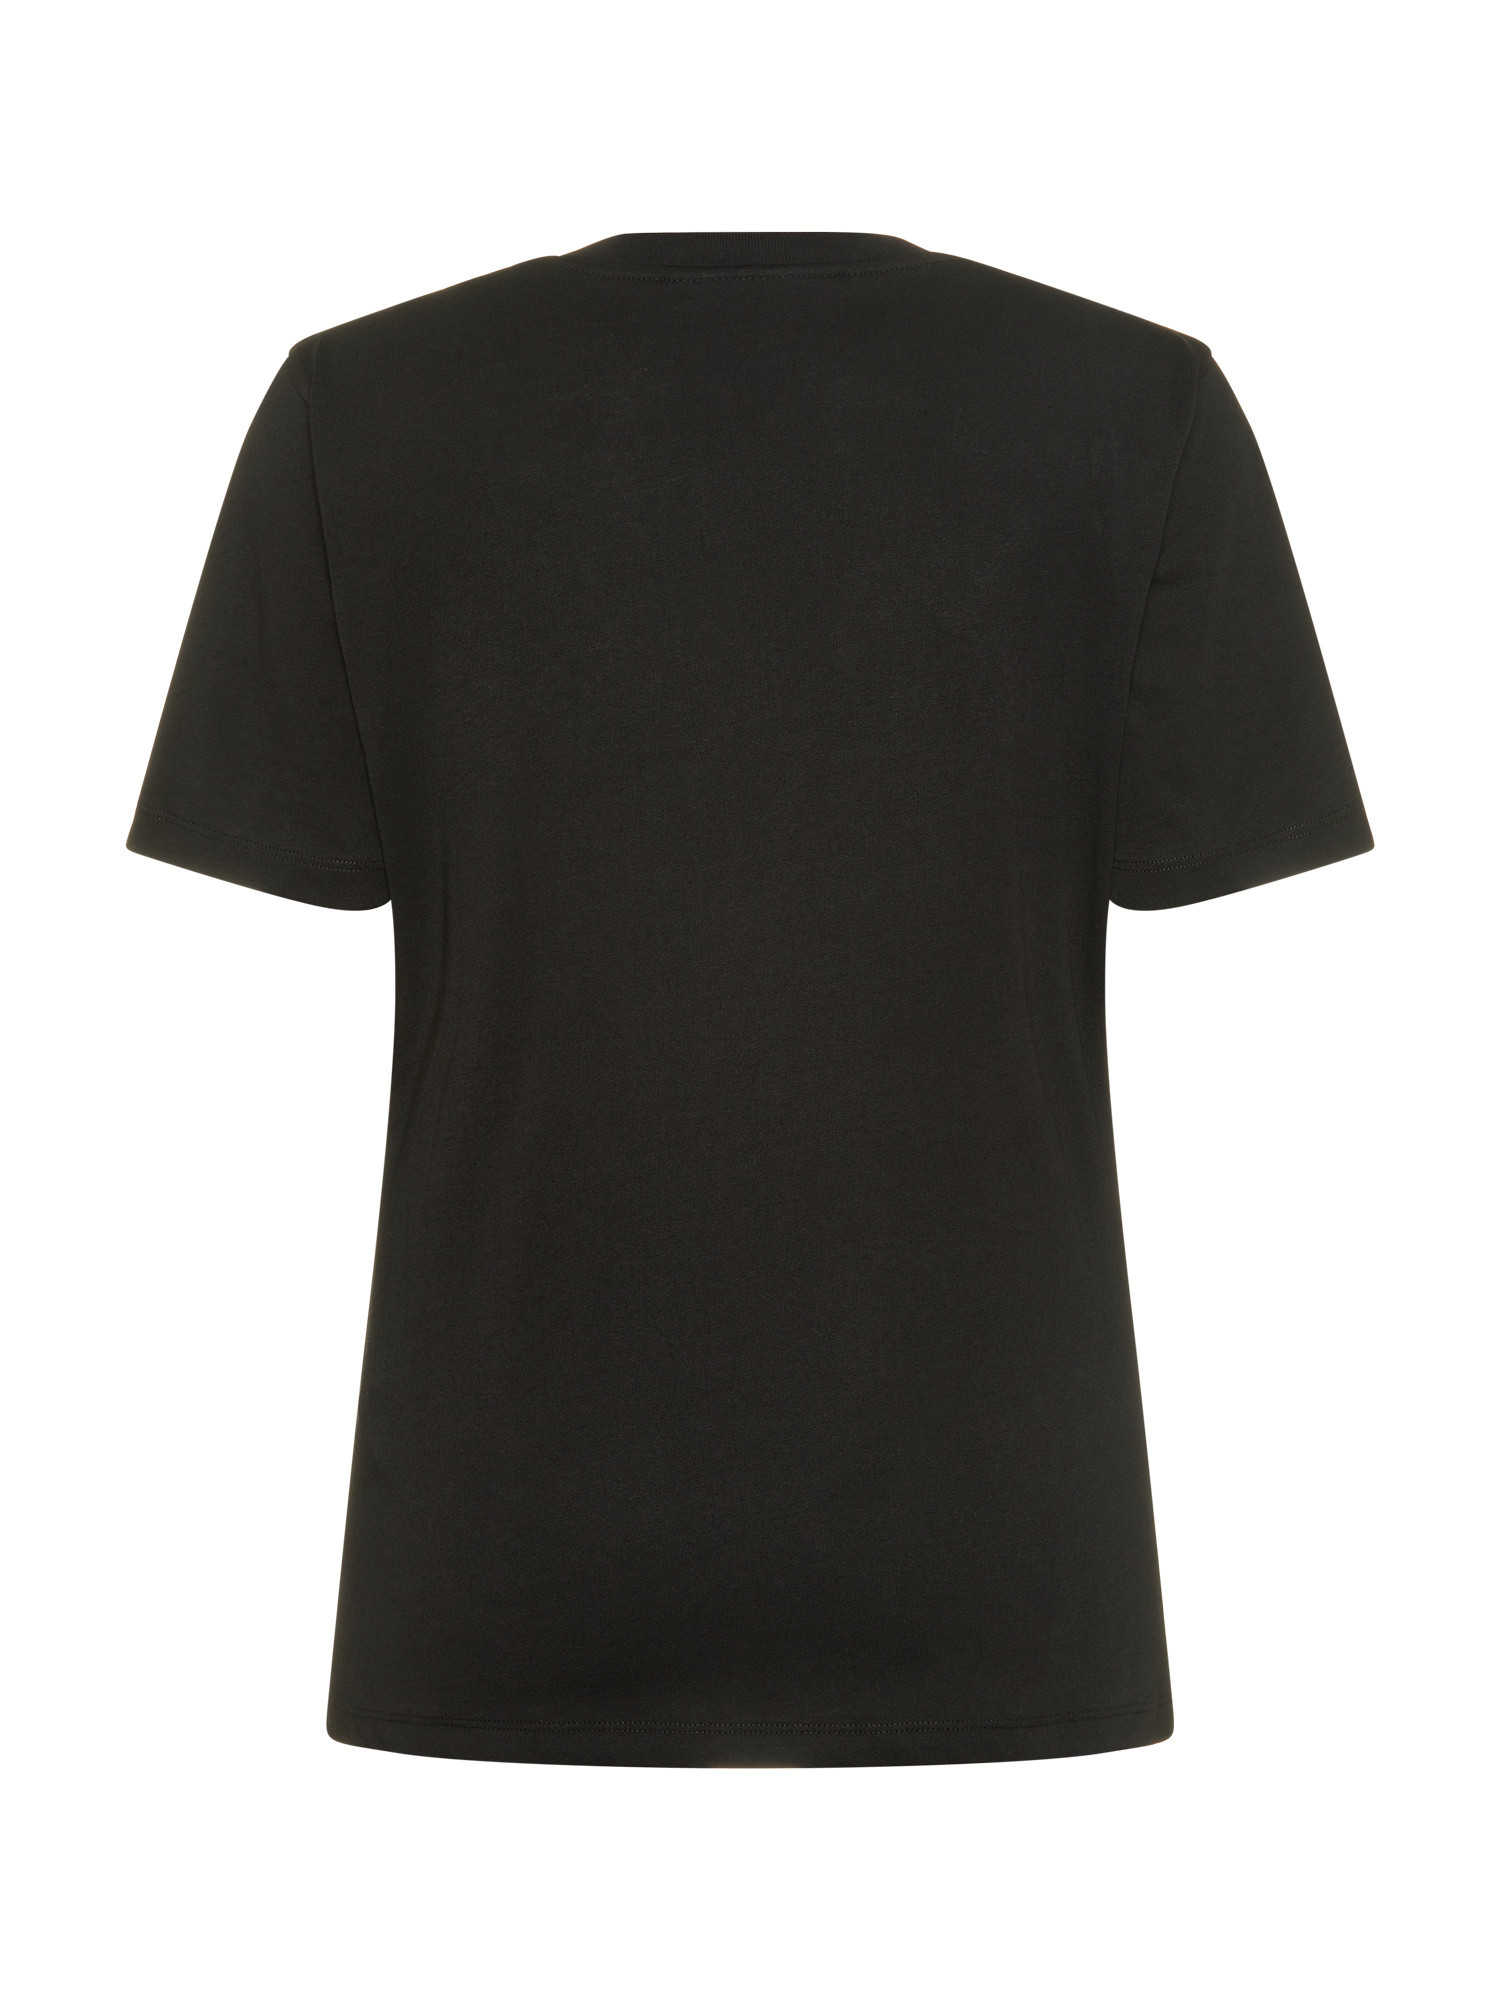 Chiara Ferragni - Embroidered logo T-shirt, Black, large image number 1